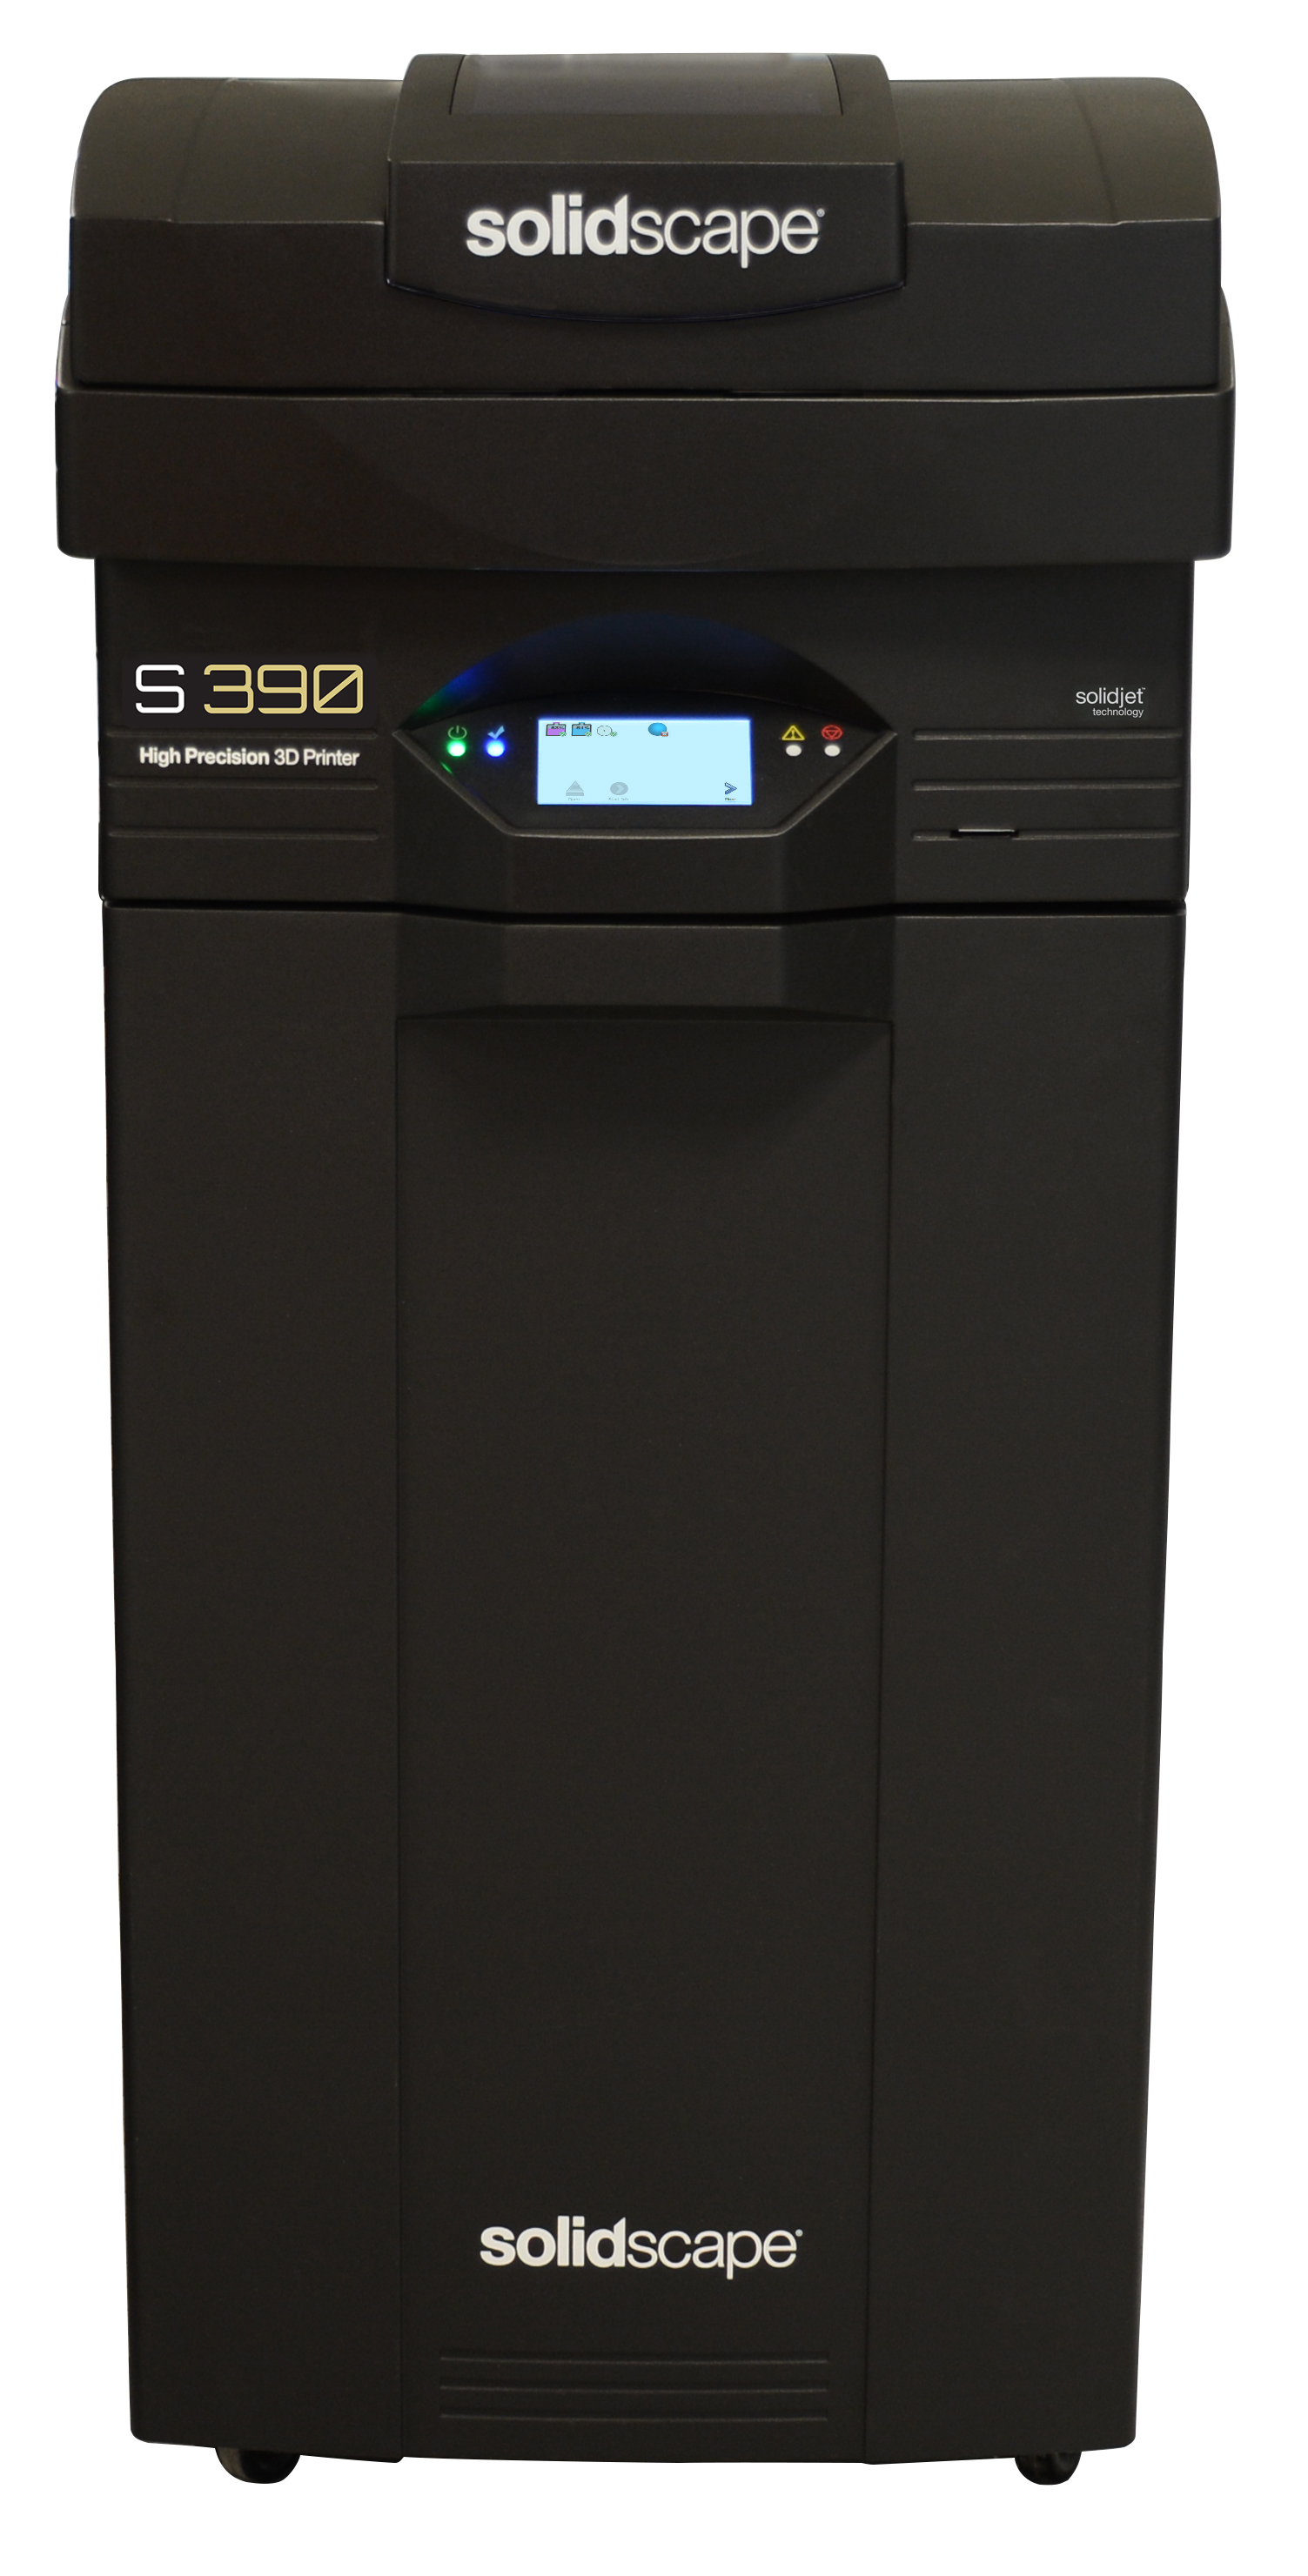 The S390 high precision 3D printer